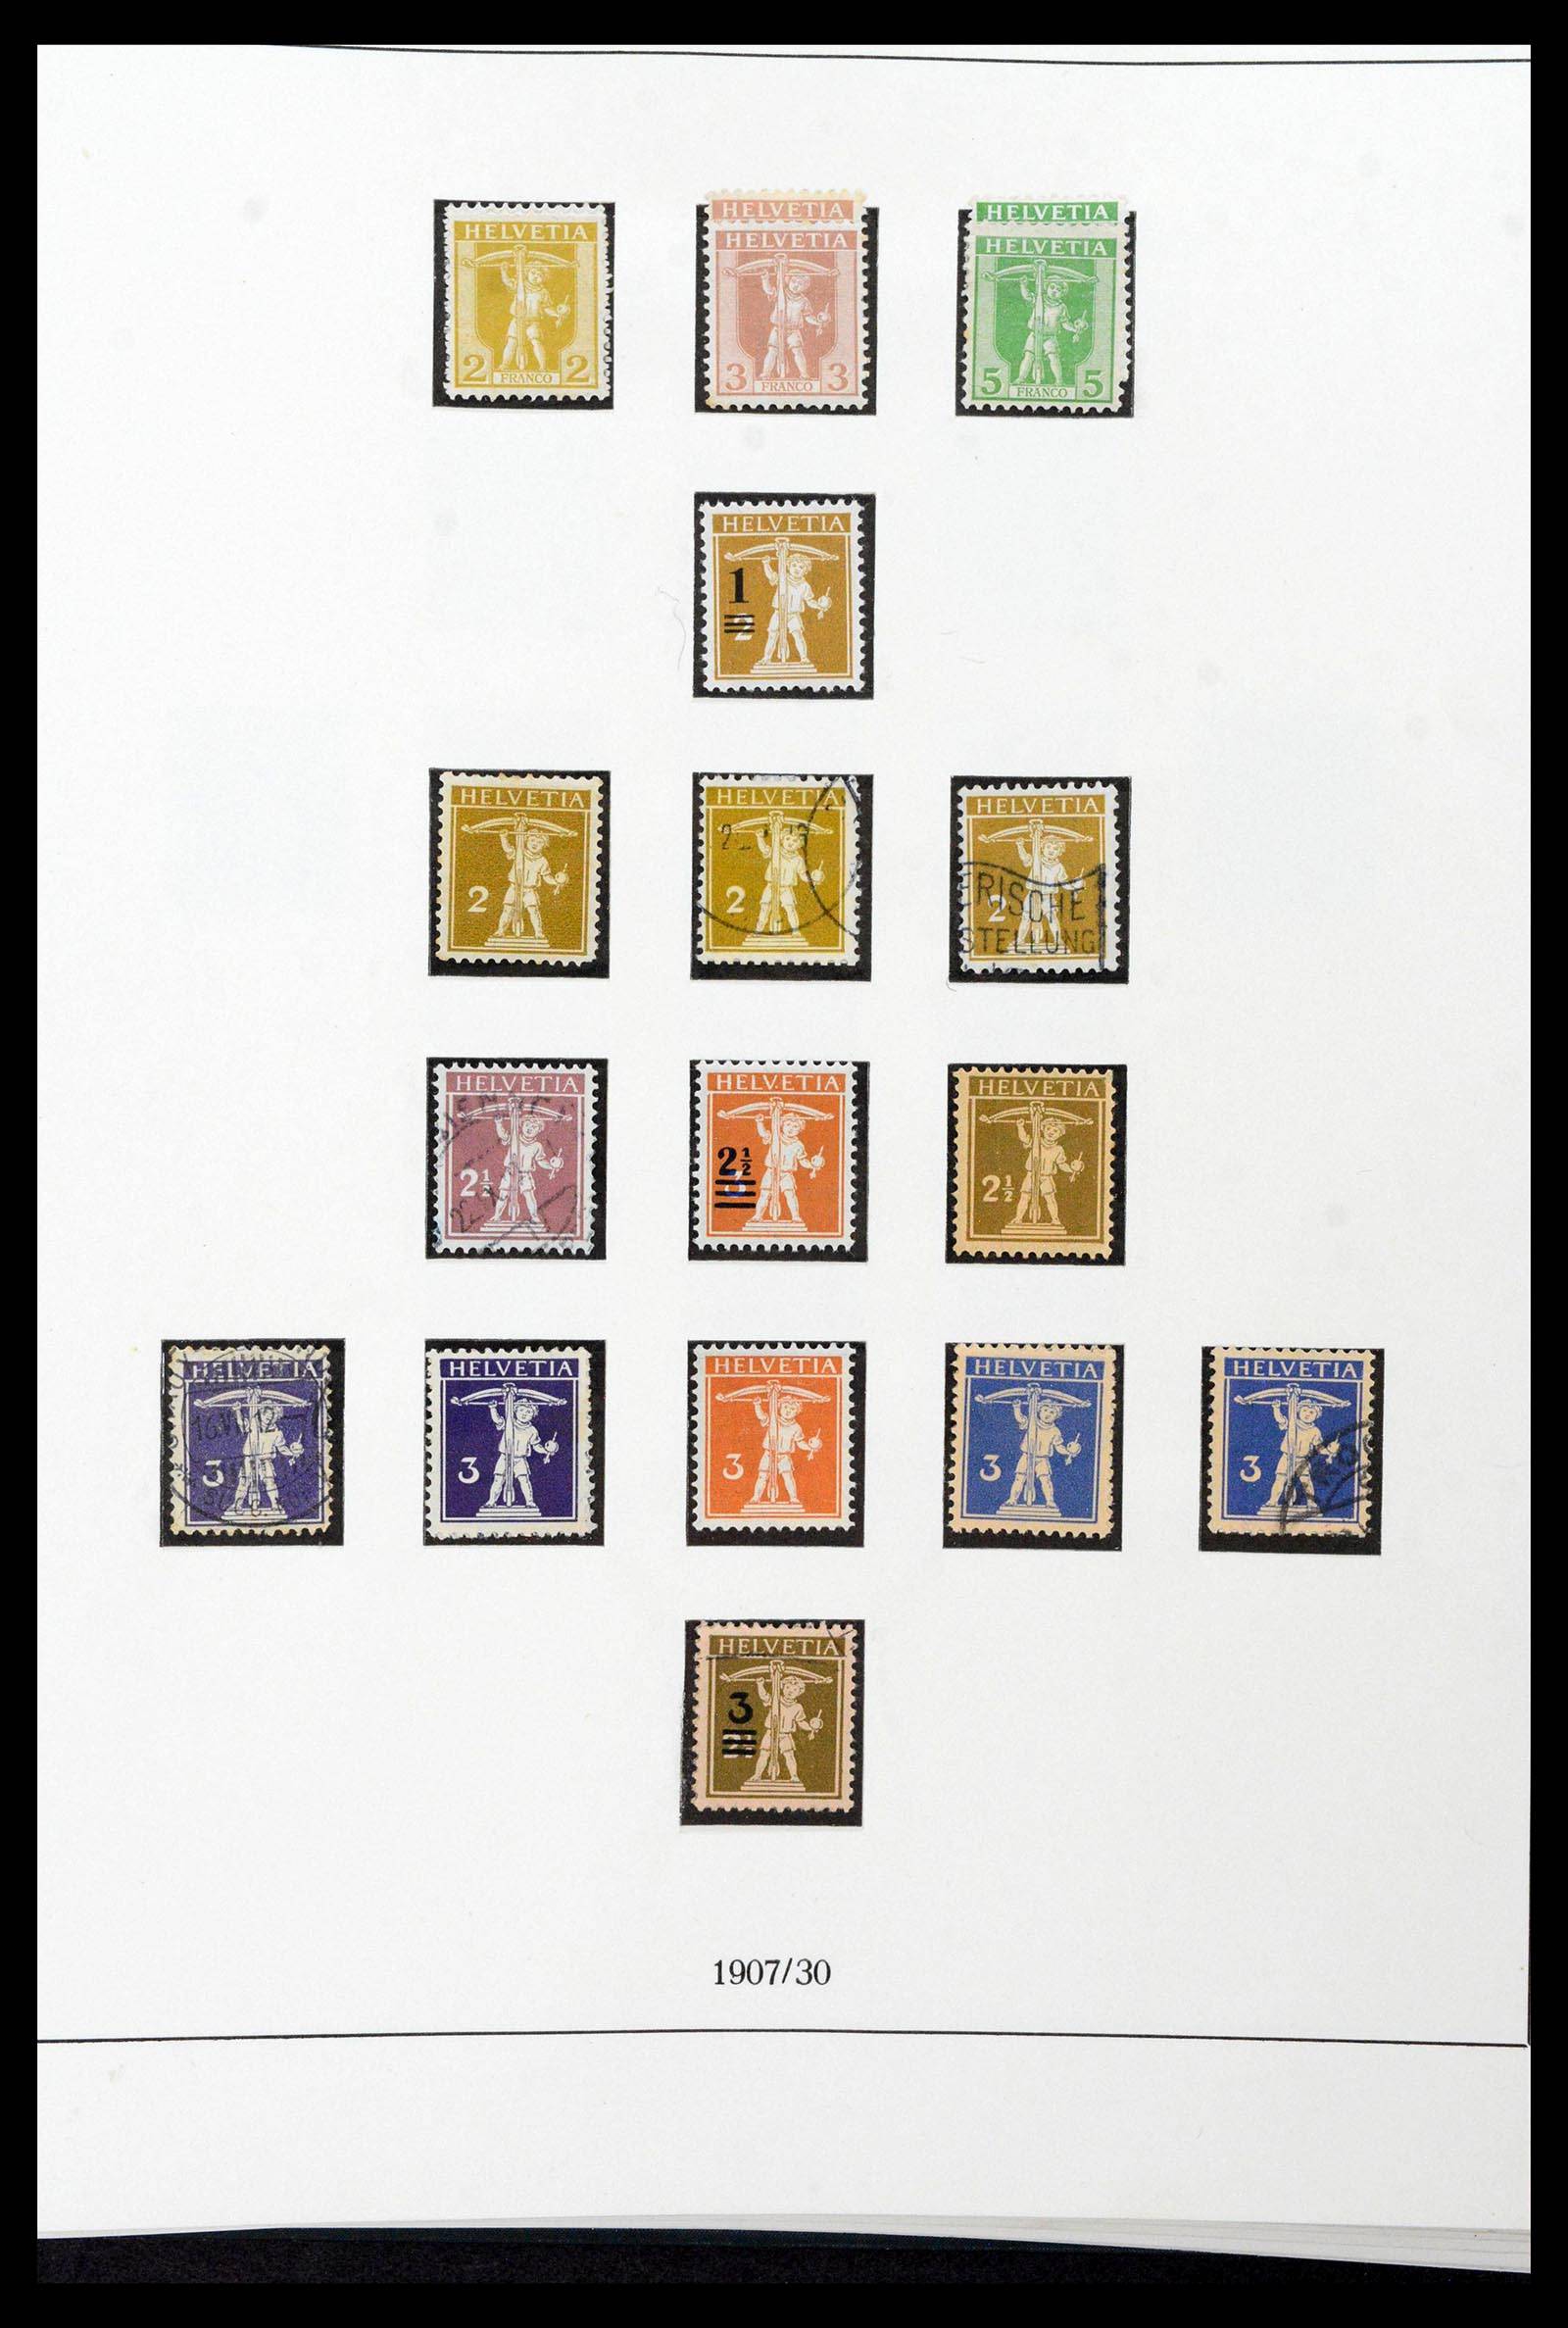 39235 0012 - Stamp collection 39235 Switzerland 1843-1960.